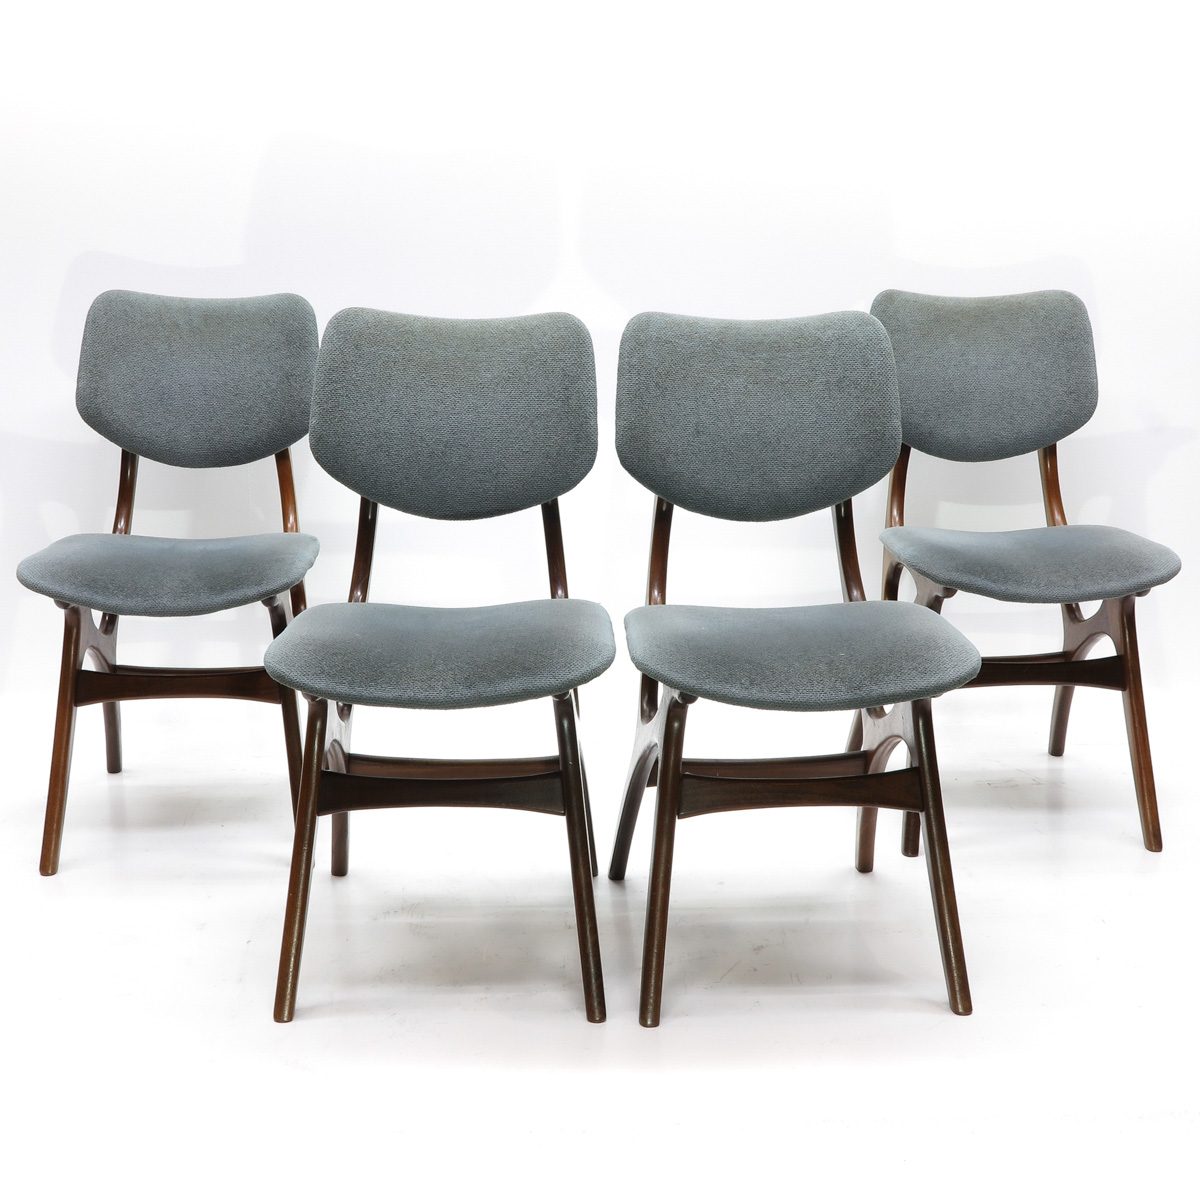 A Set of Four Louis v. Teeffelen Teak Design Chairs